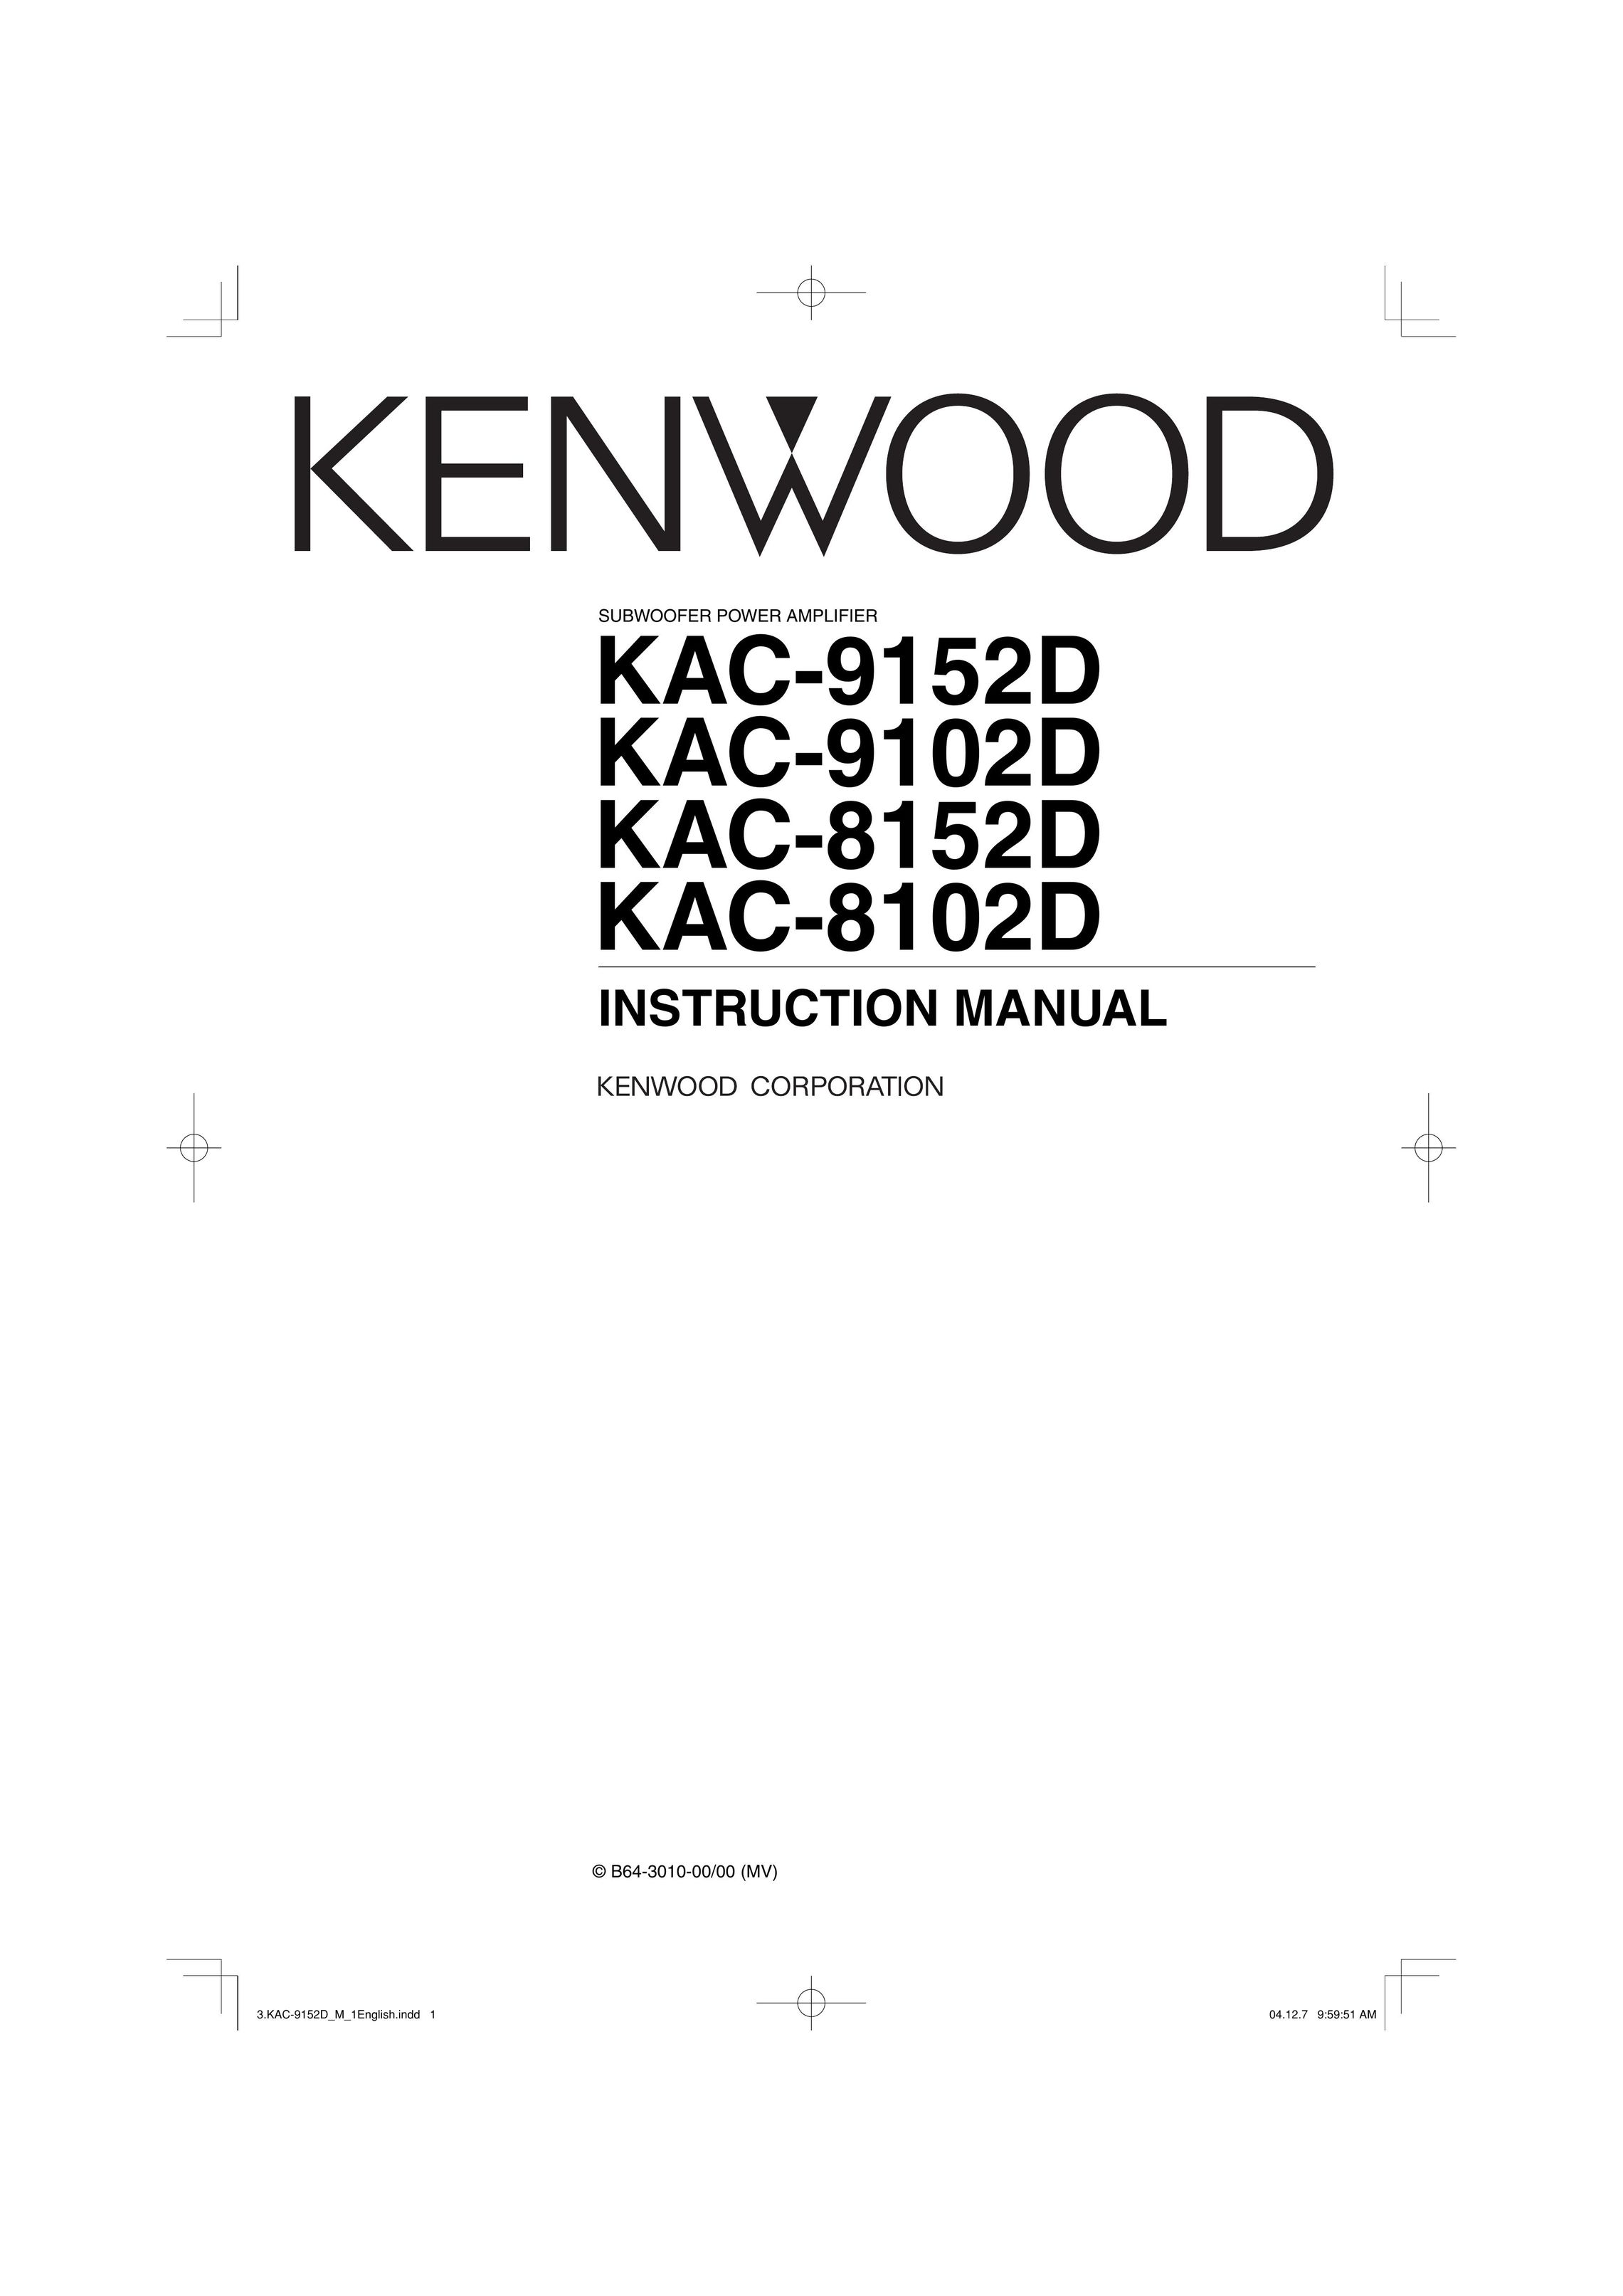 Kenwood KAC-8102D Stereo Amplifier User Manual